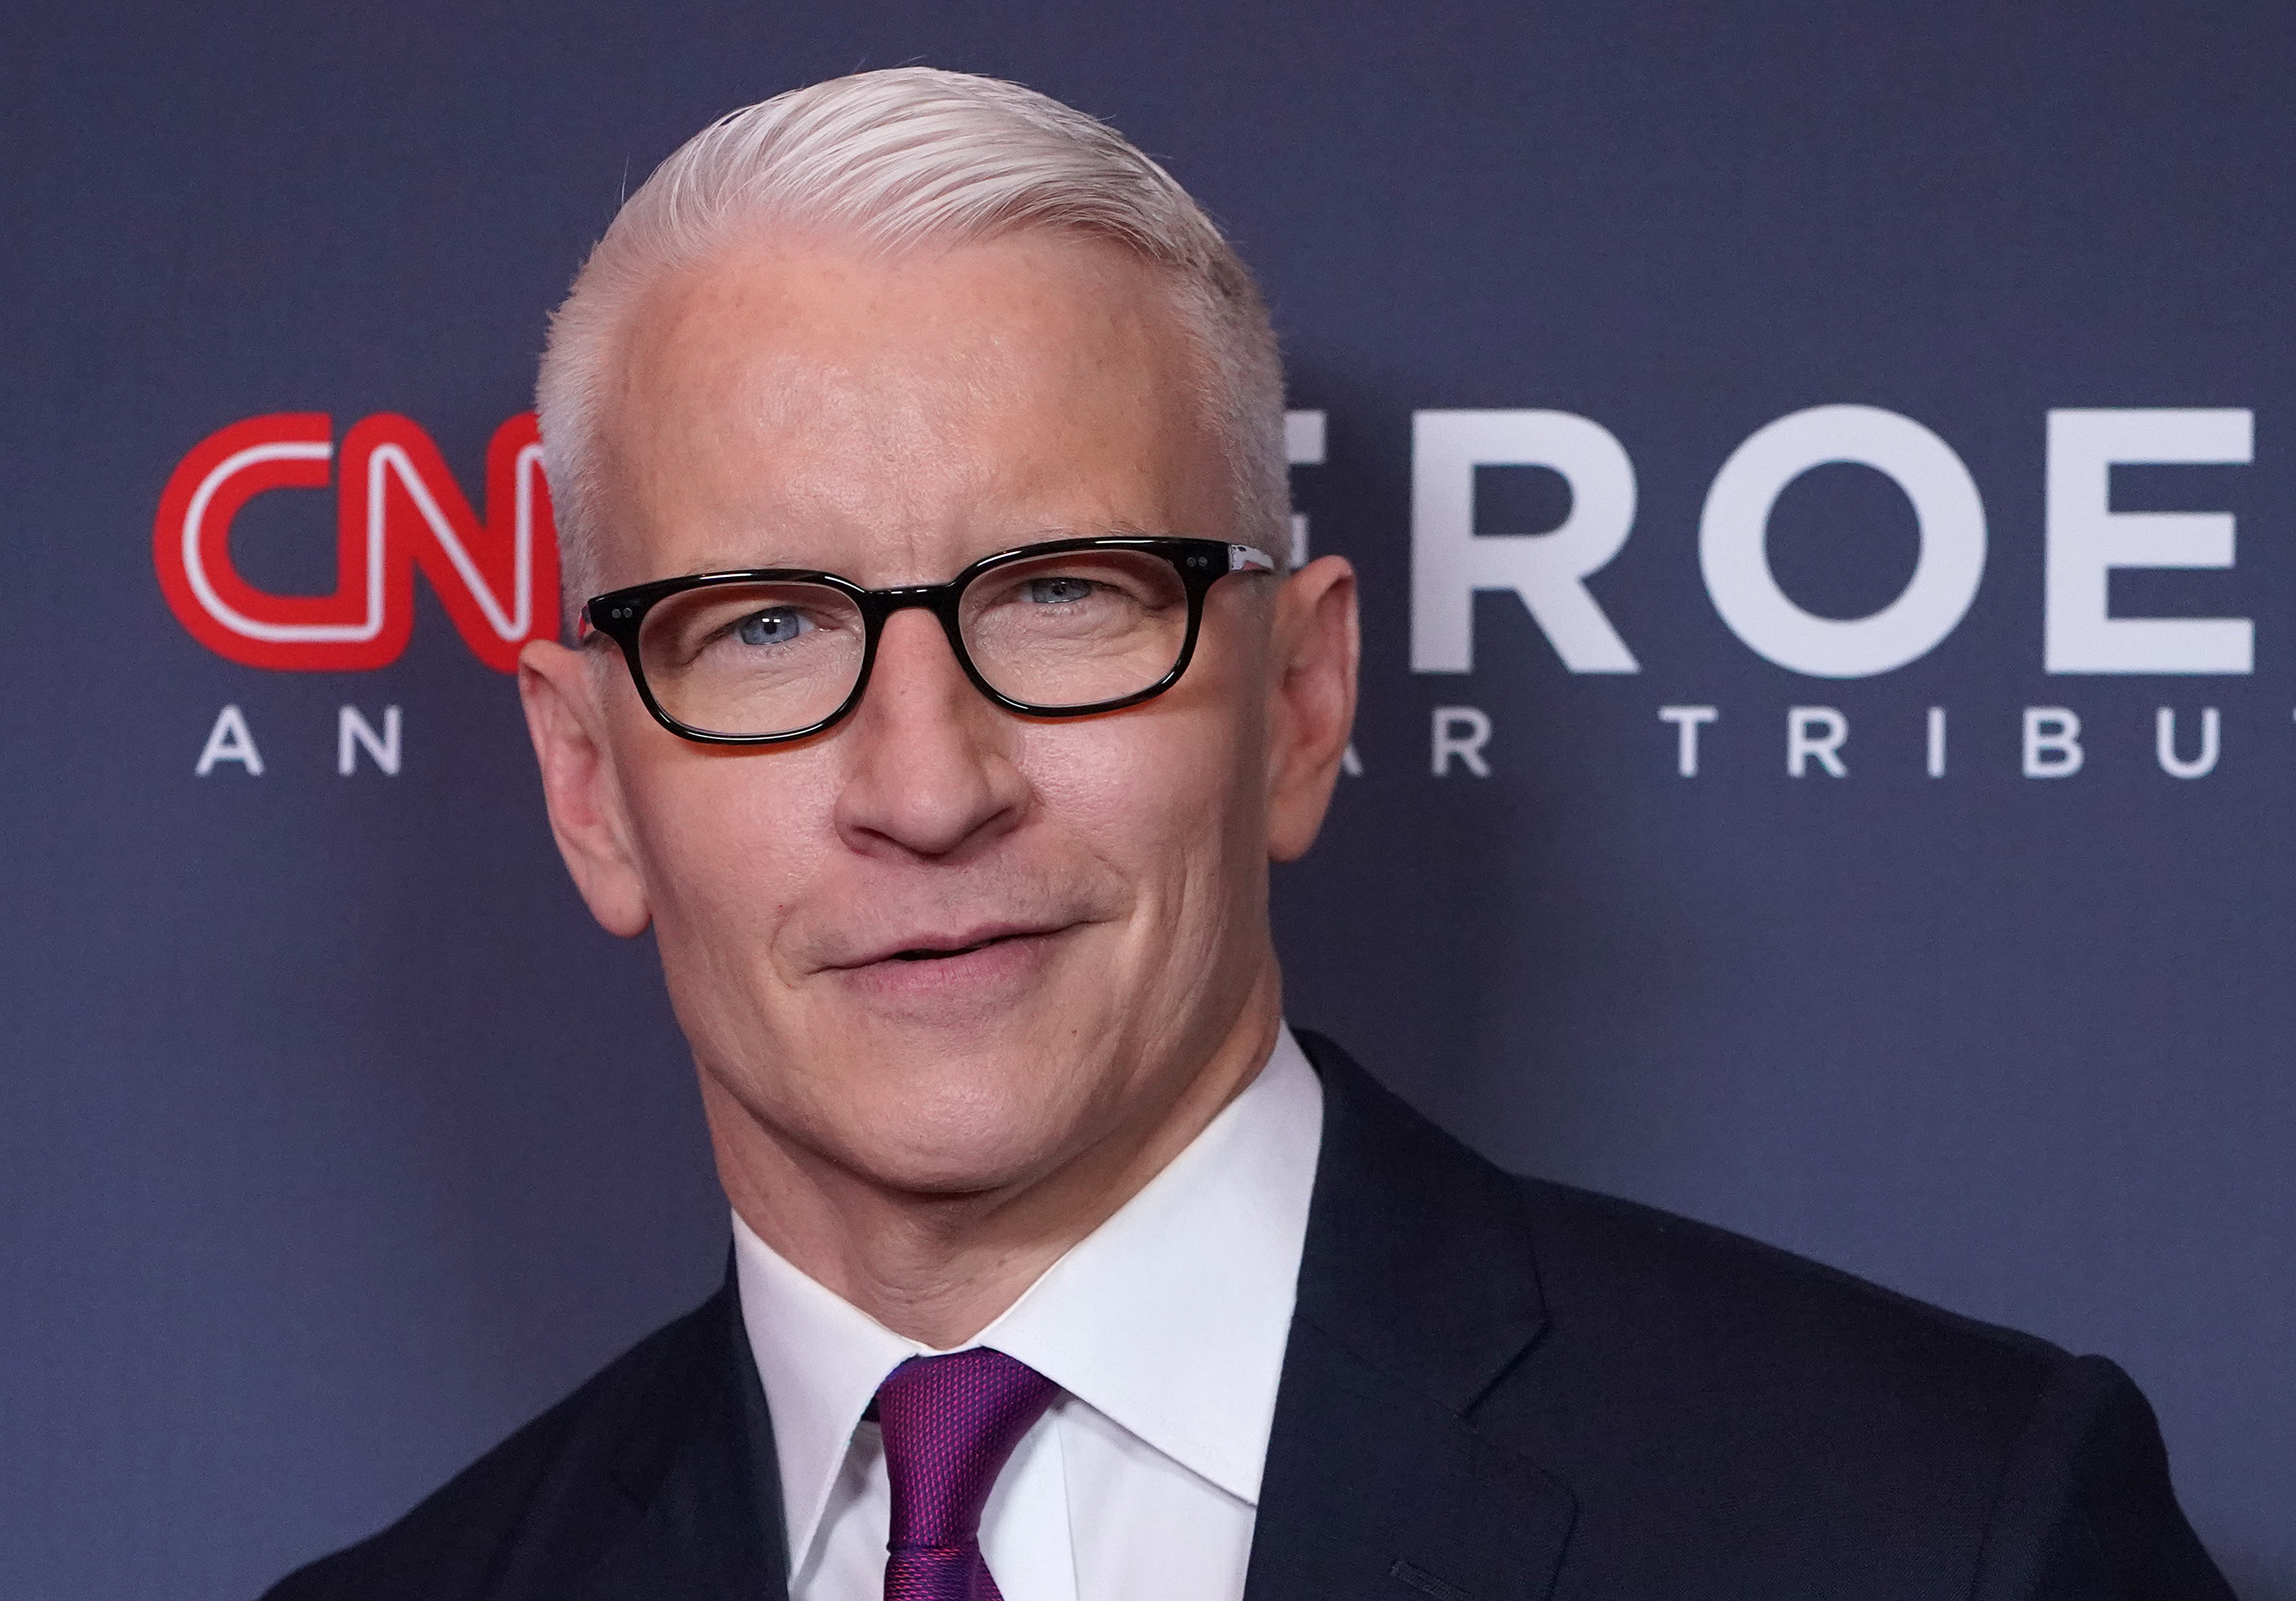 Anderson Cooper smiles